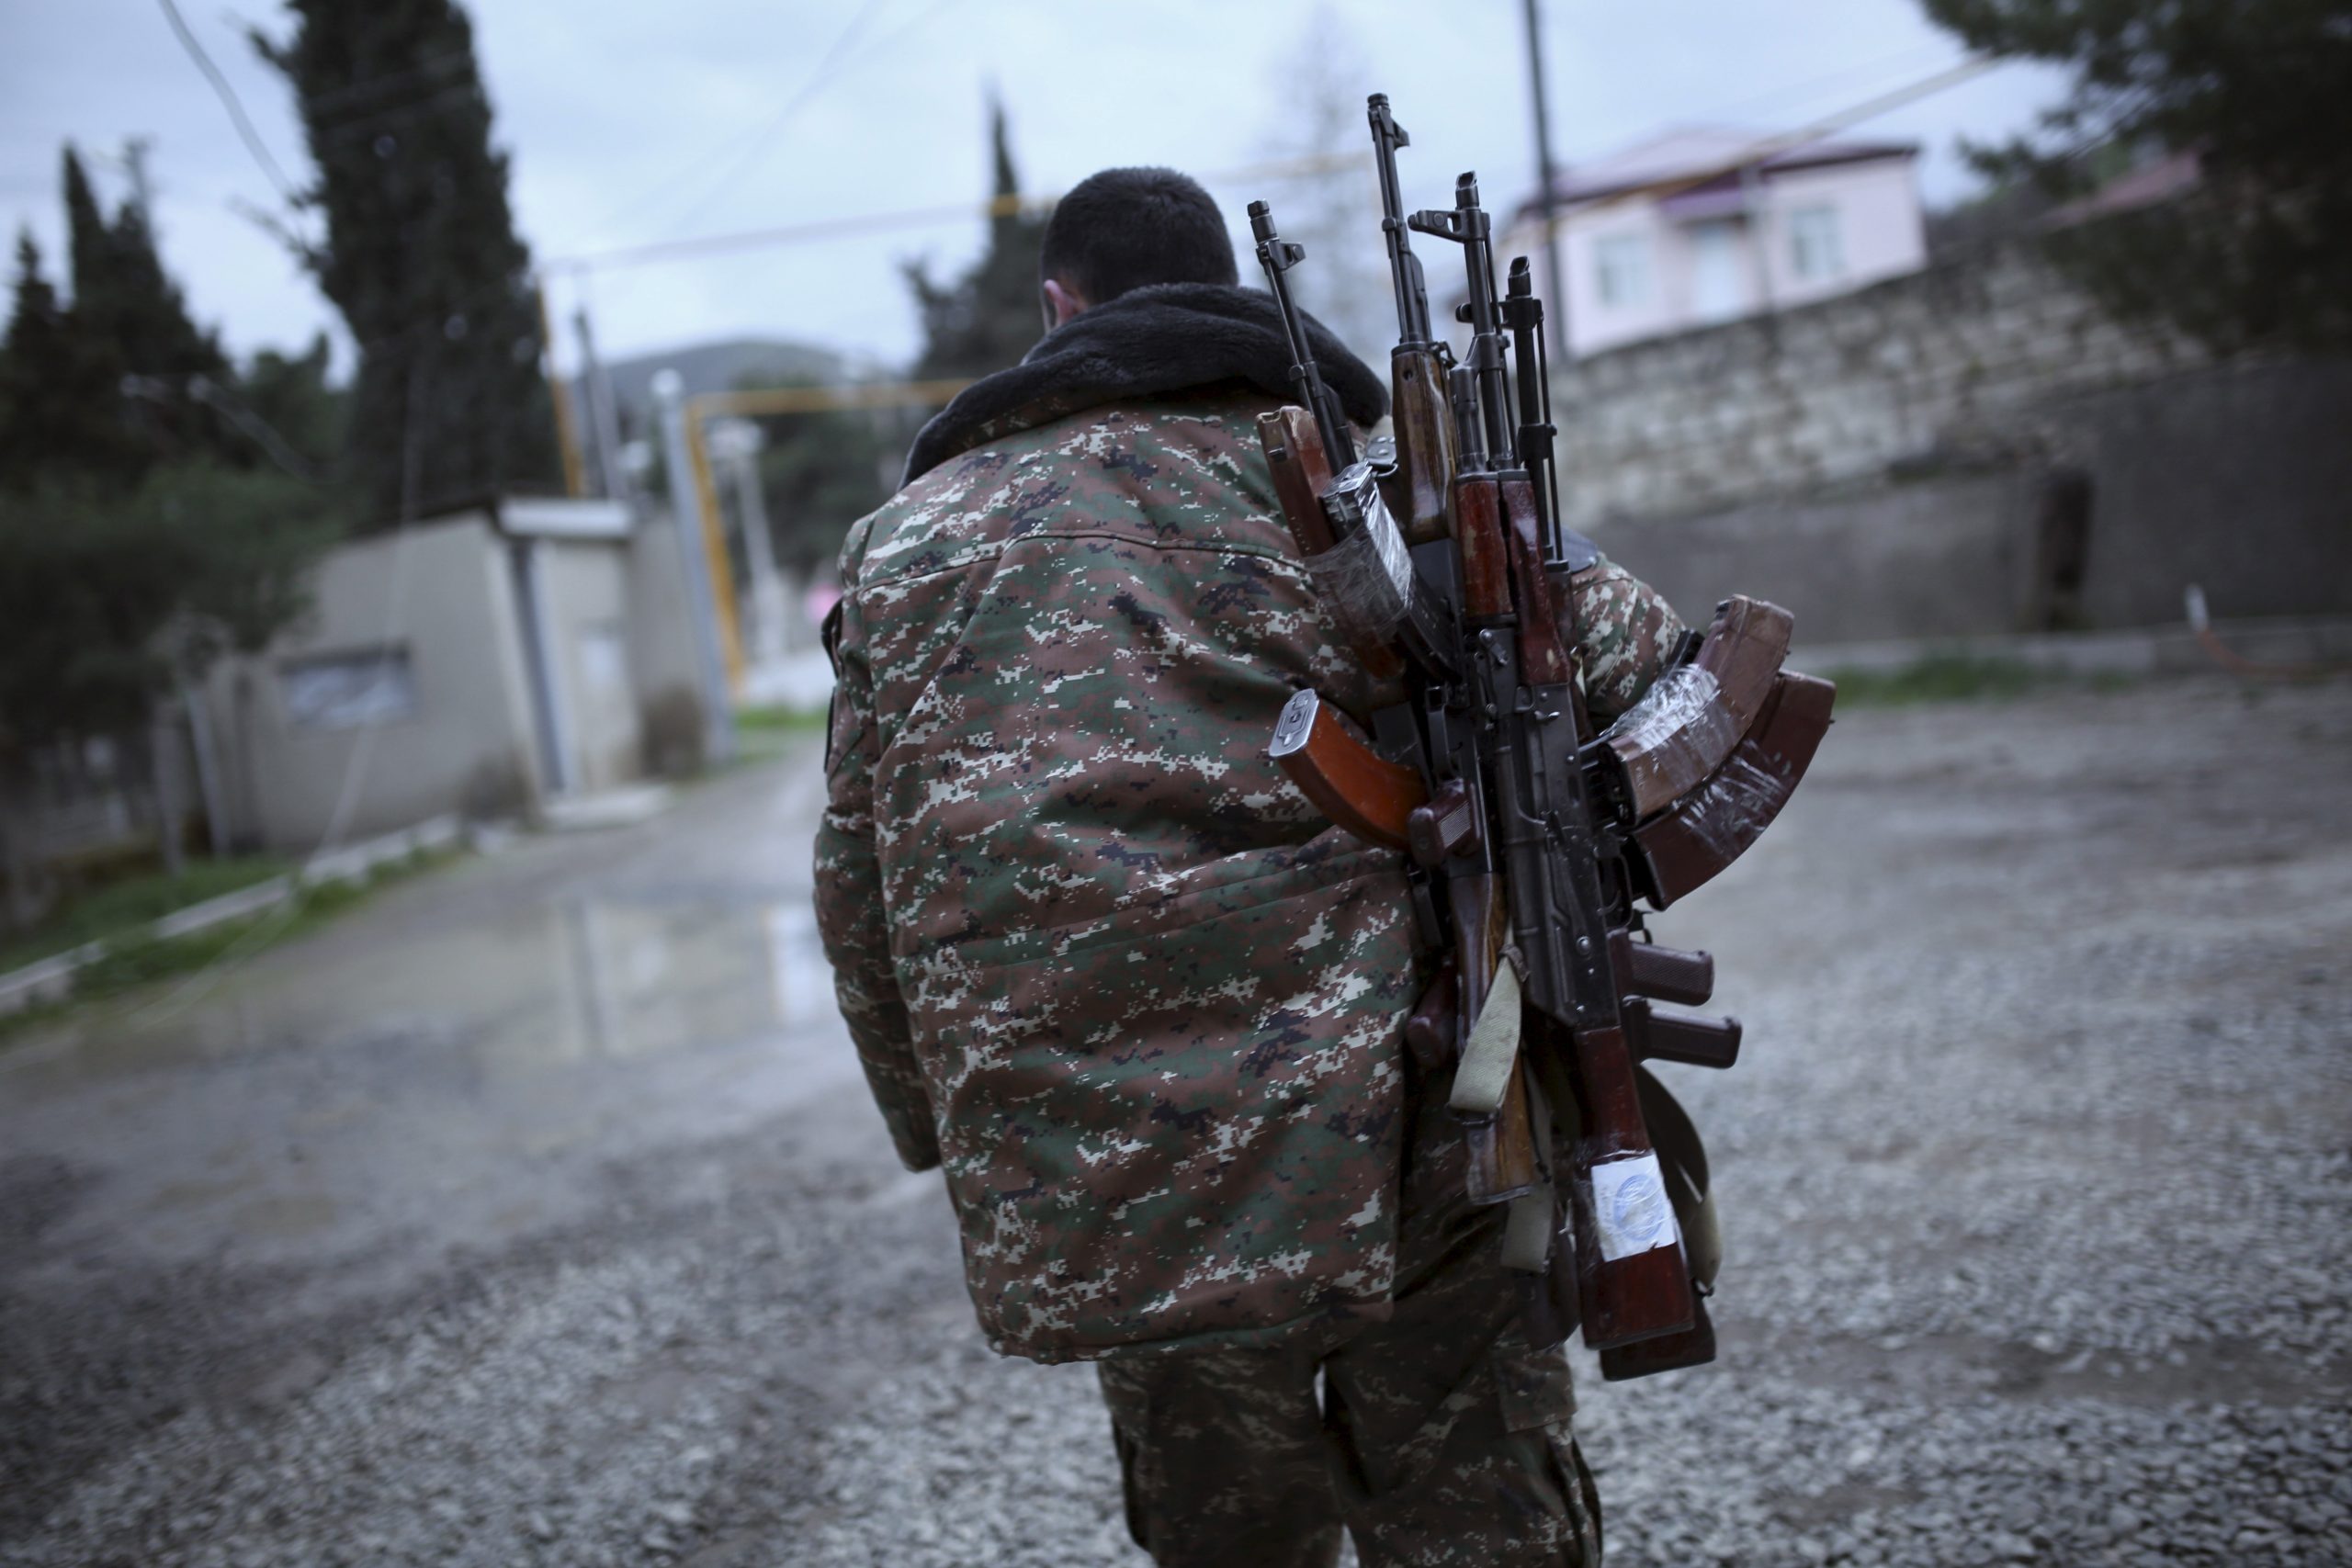 Arms sale claim heightened tensions ahead of 2023 Armenia-Azerbaijan peace talks